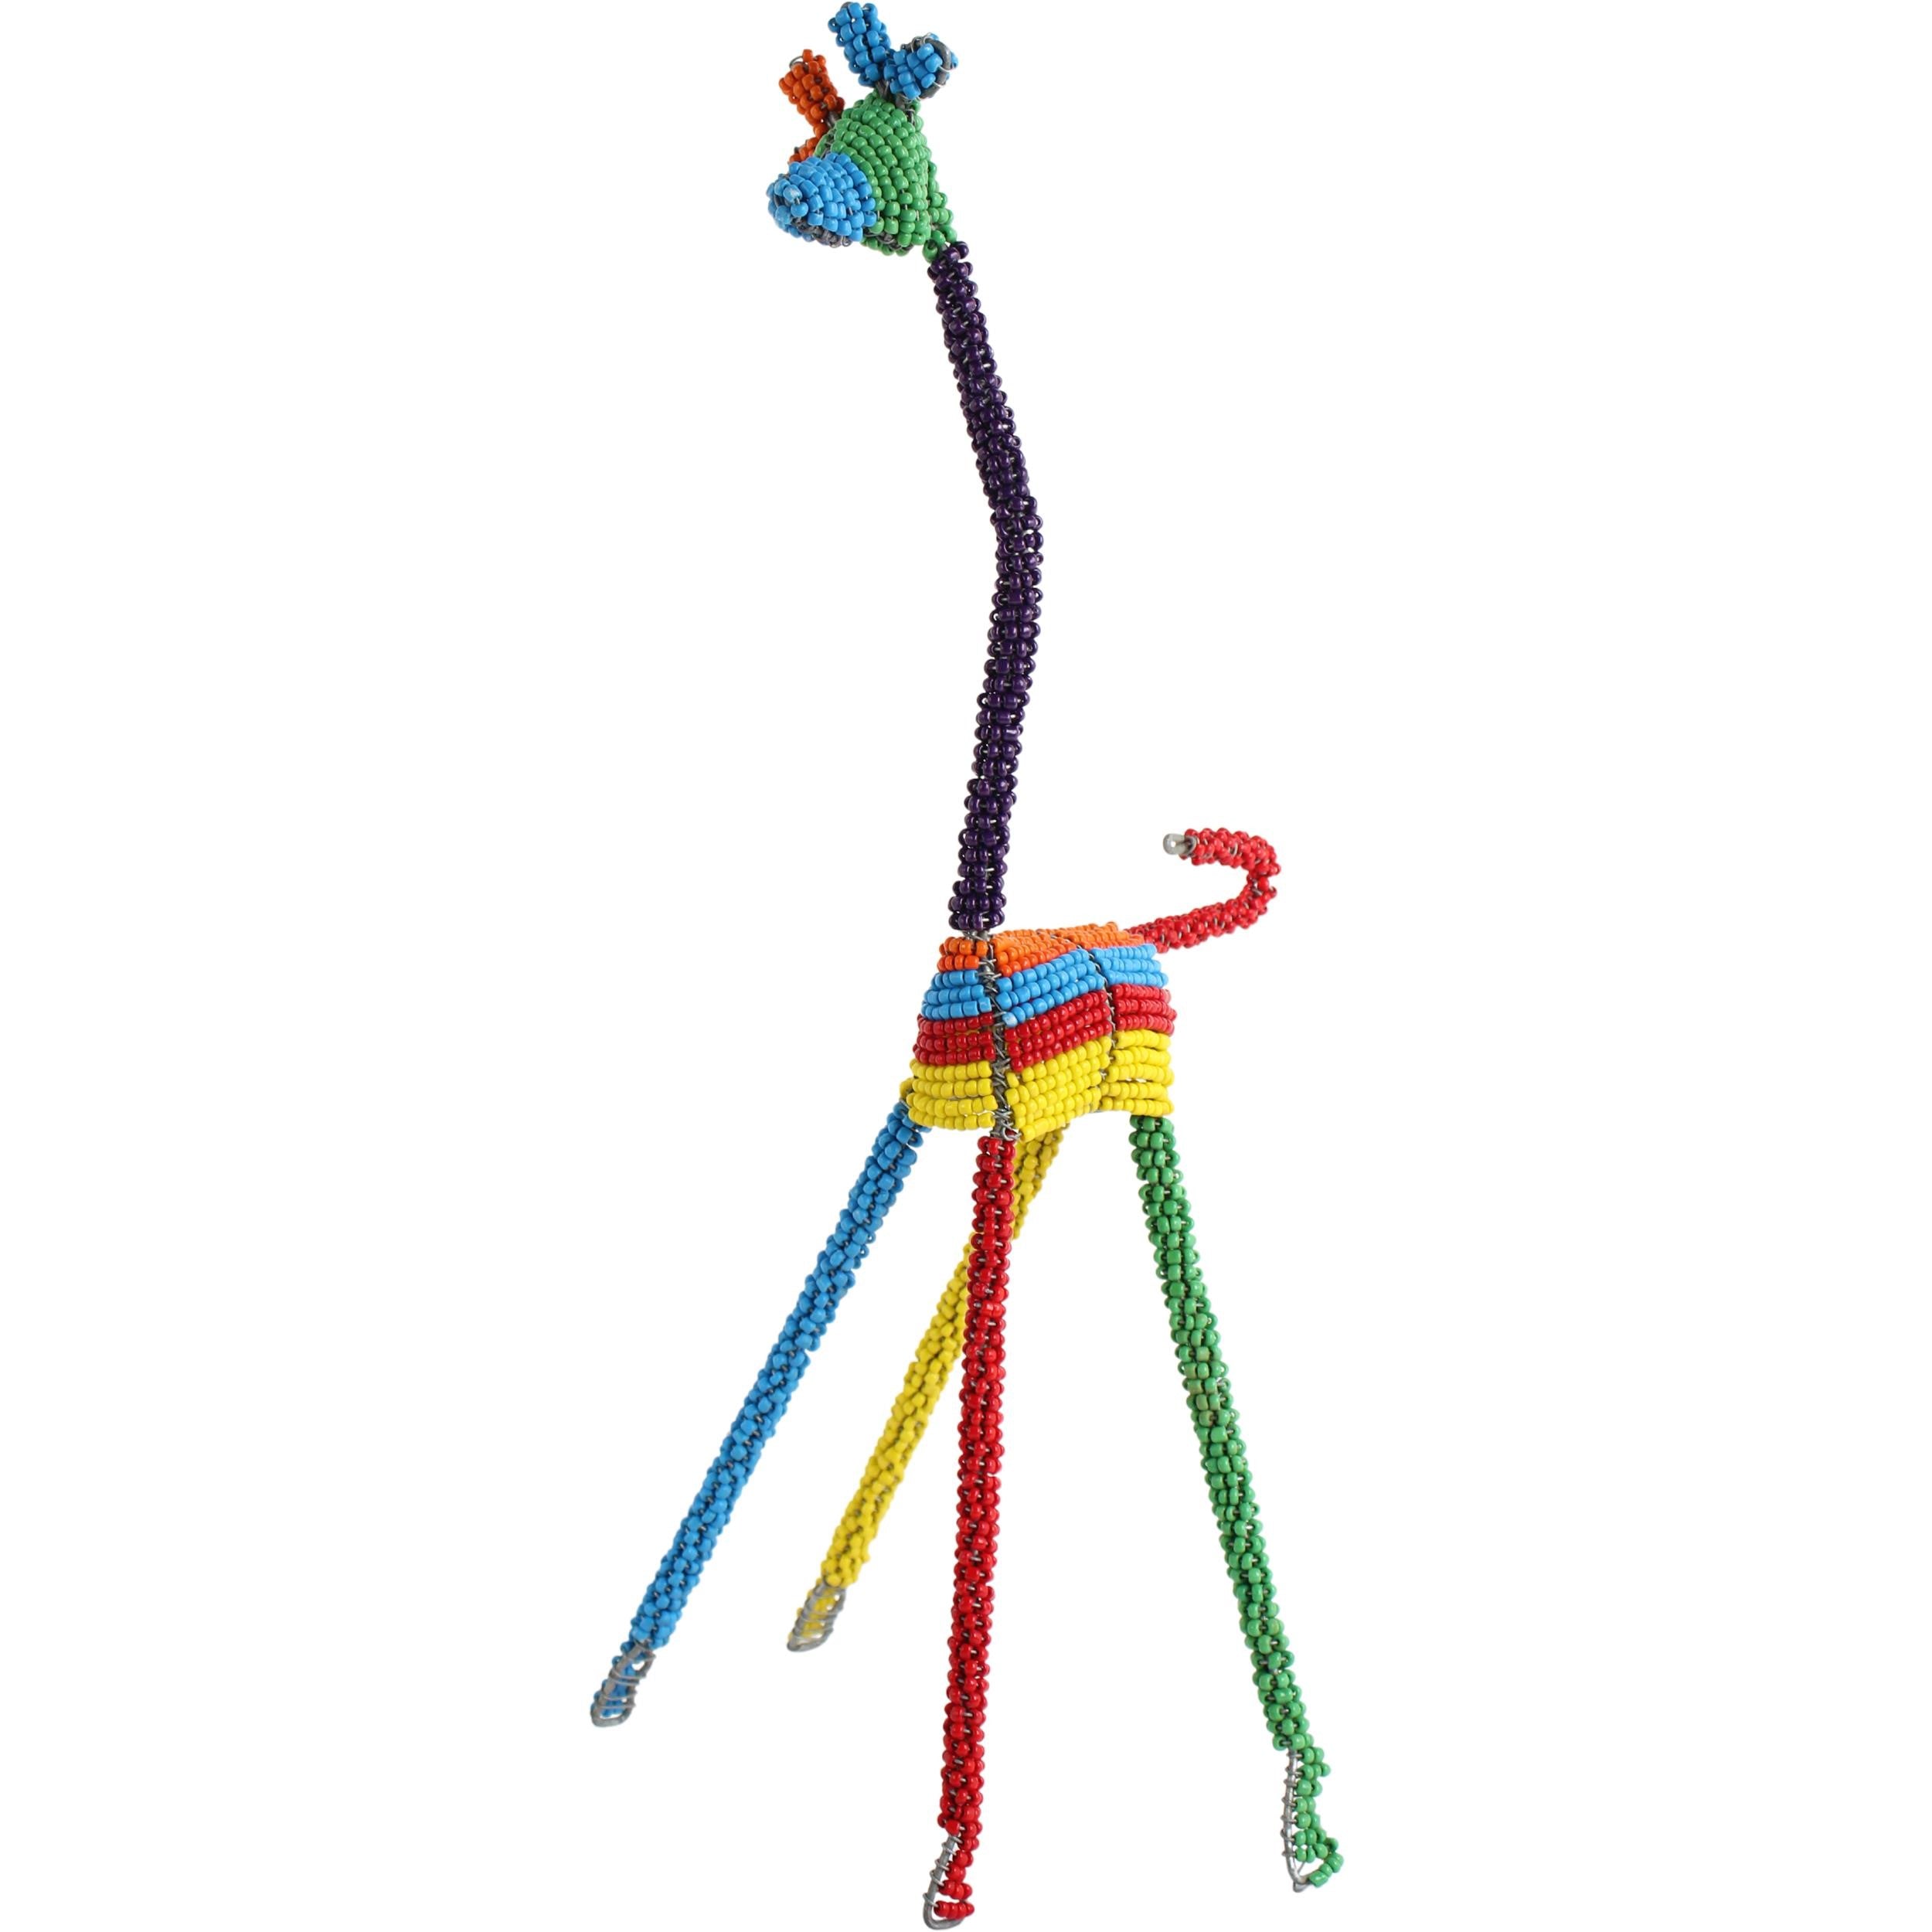 Shona Tribe Wire and Beaded Animals - Giraffe ~11.8" Tall - Wire and Beaded Animals